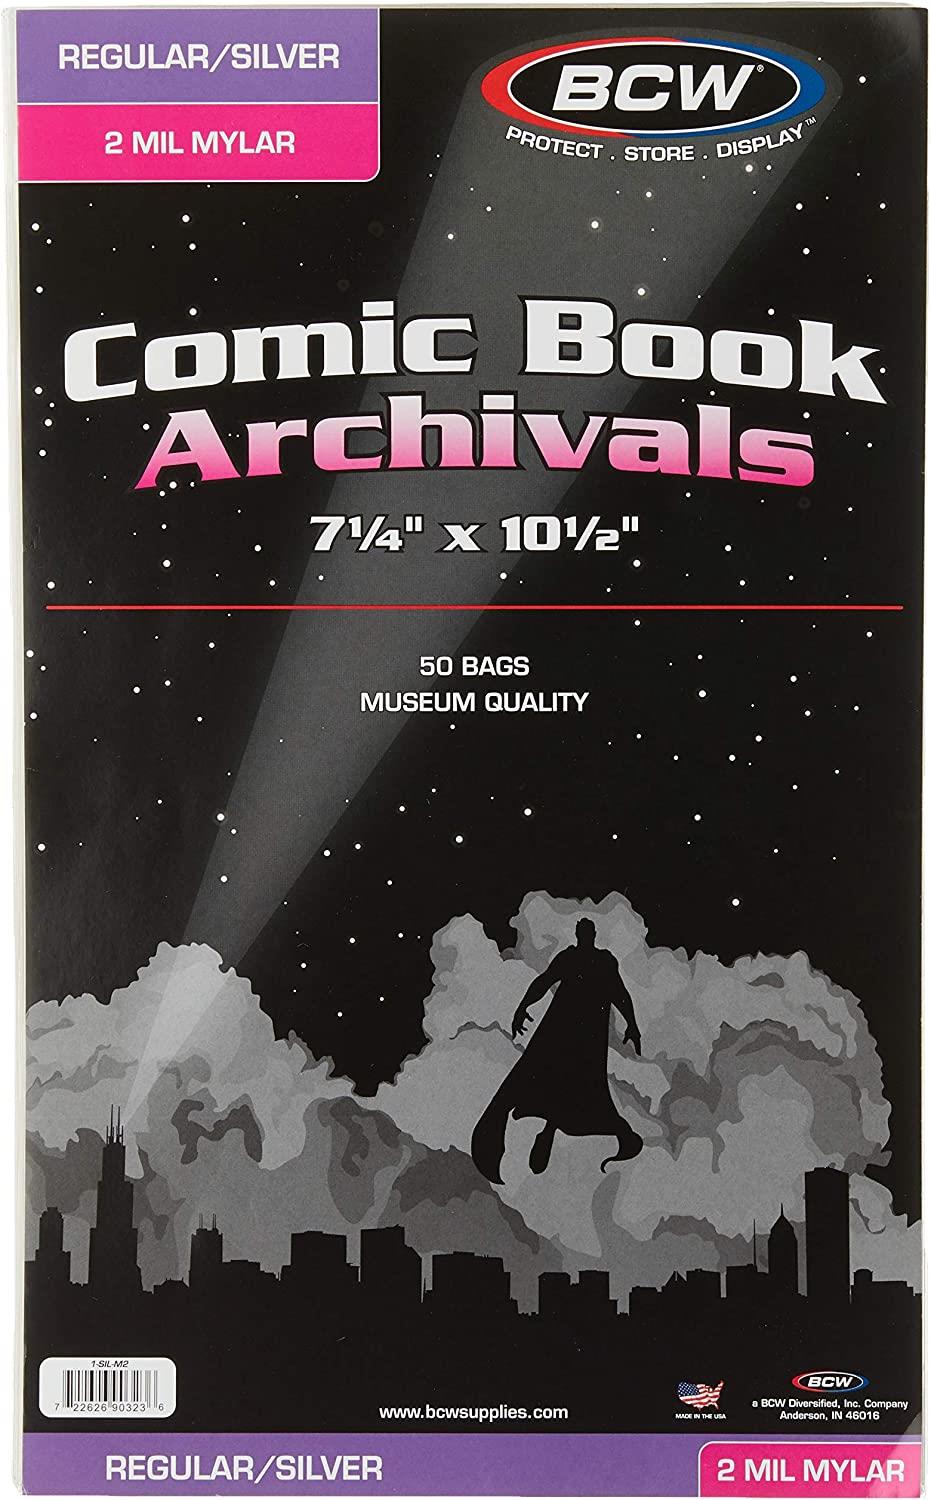 BCW Silver/Regular Comic Mylar Archivals - 2 MIL